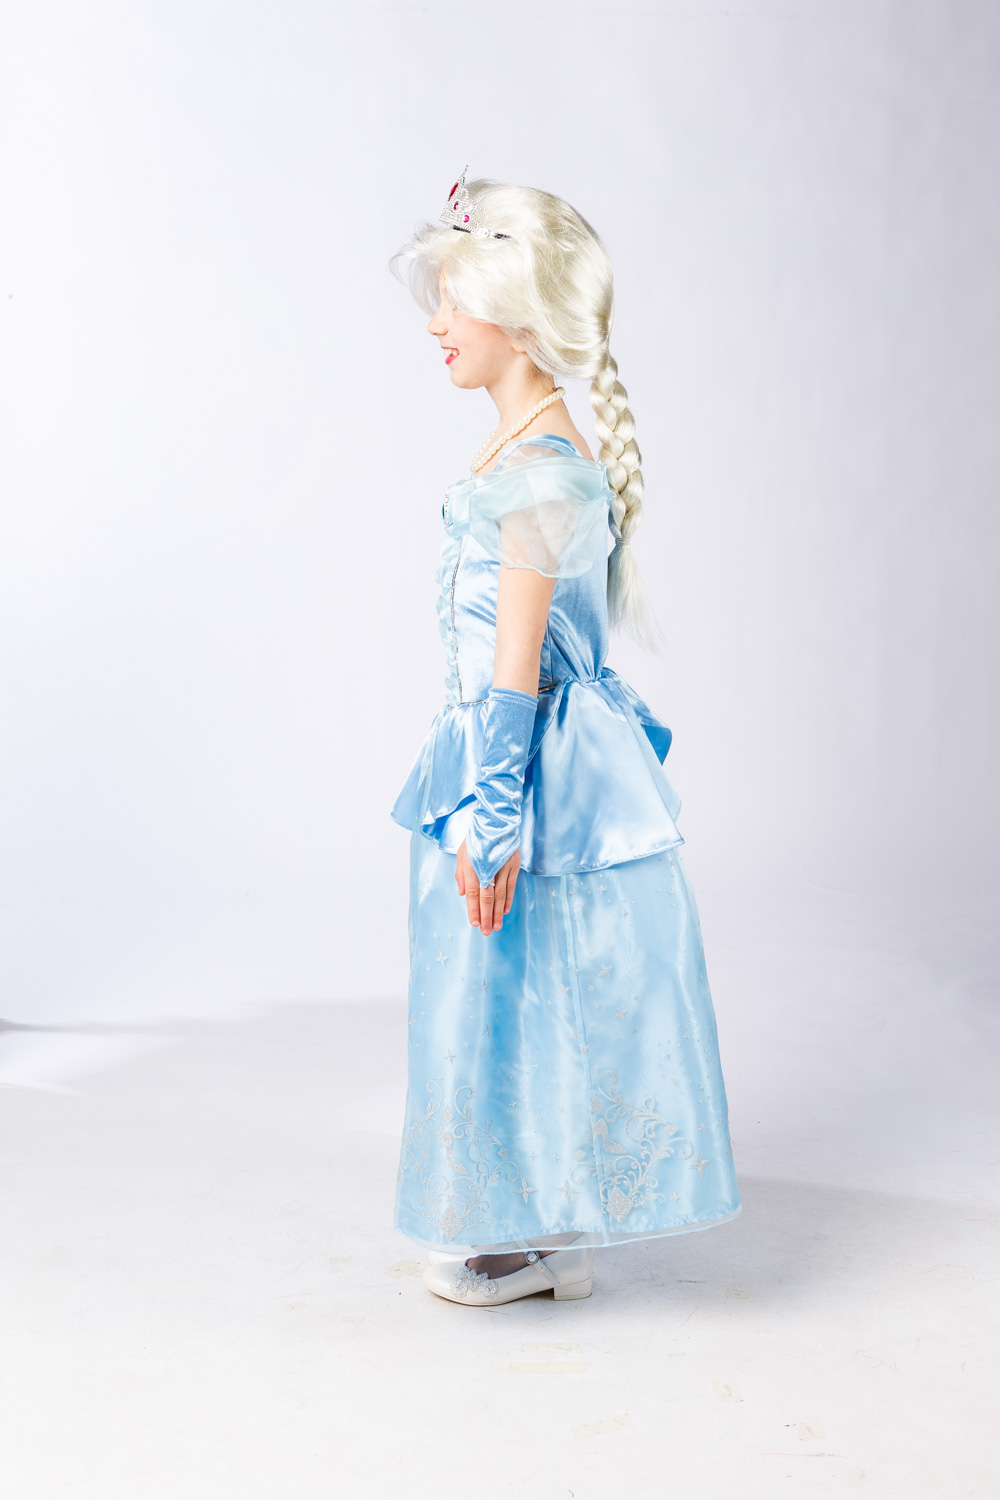 Costume de princesse bleu